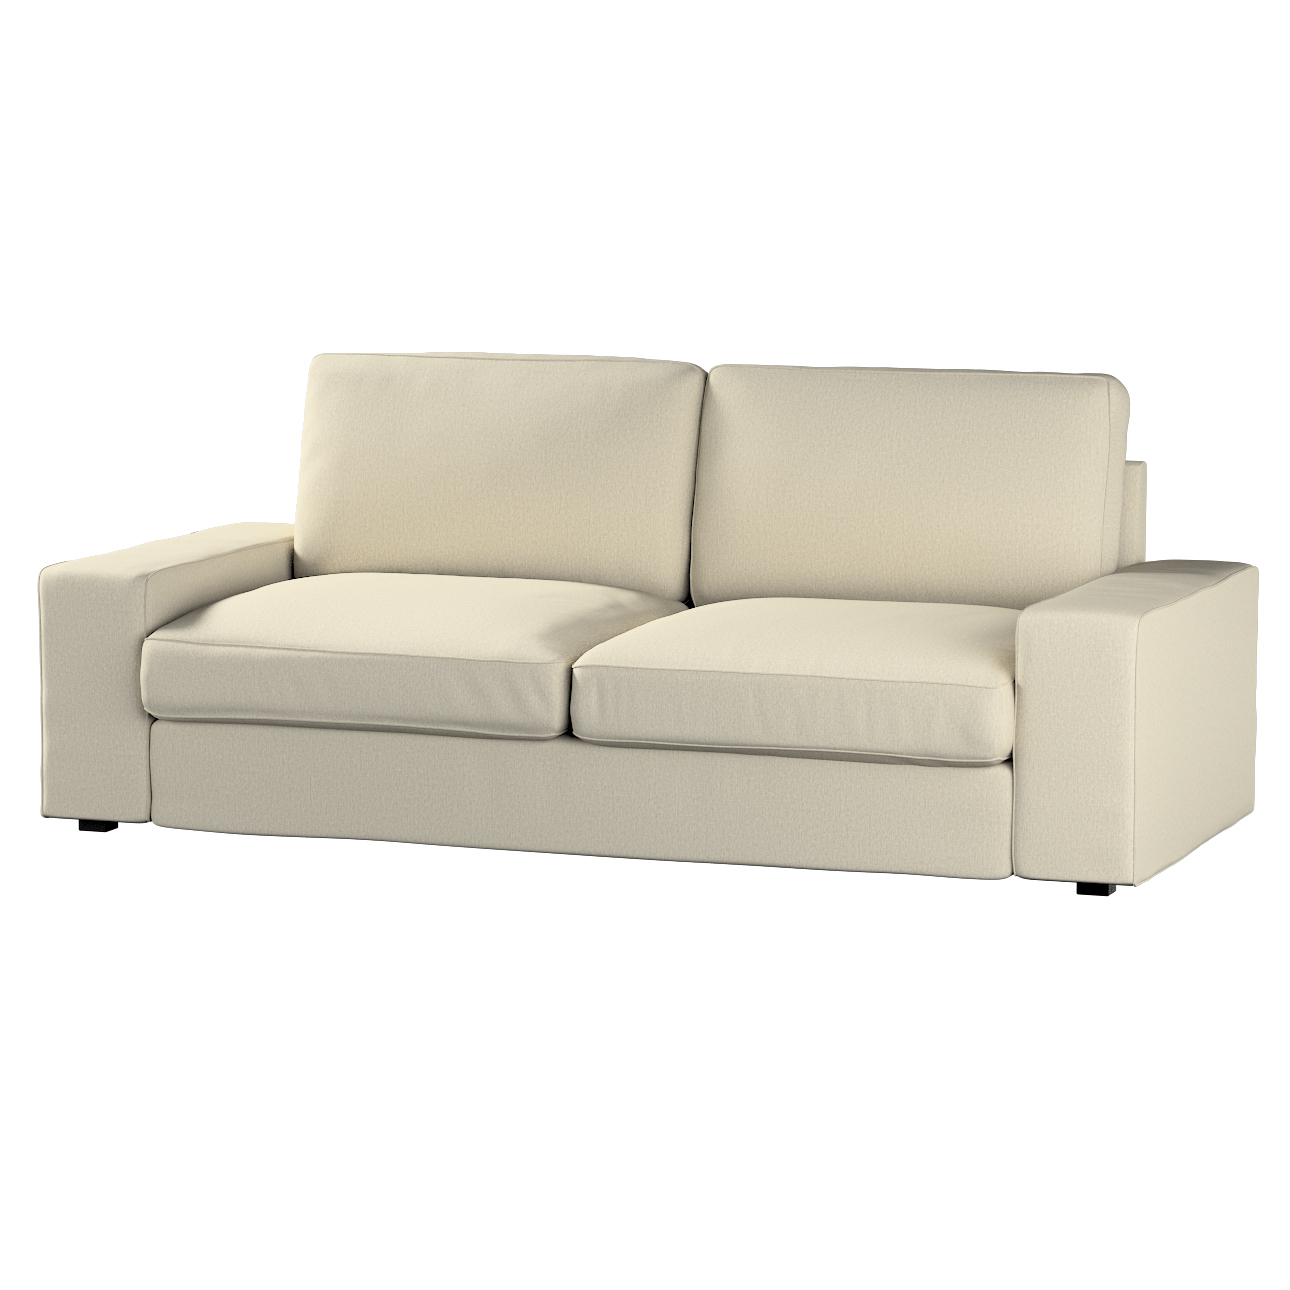 Bezug für Kivik 3-Sitzer Sofa, beige-grau, Bezug für Sofa Kivik 3-Sitzer, M günstig online kaufen